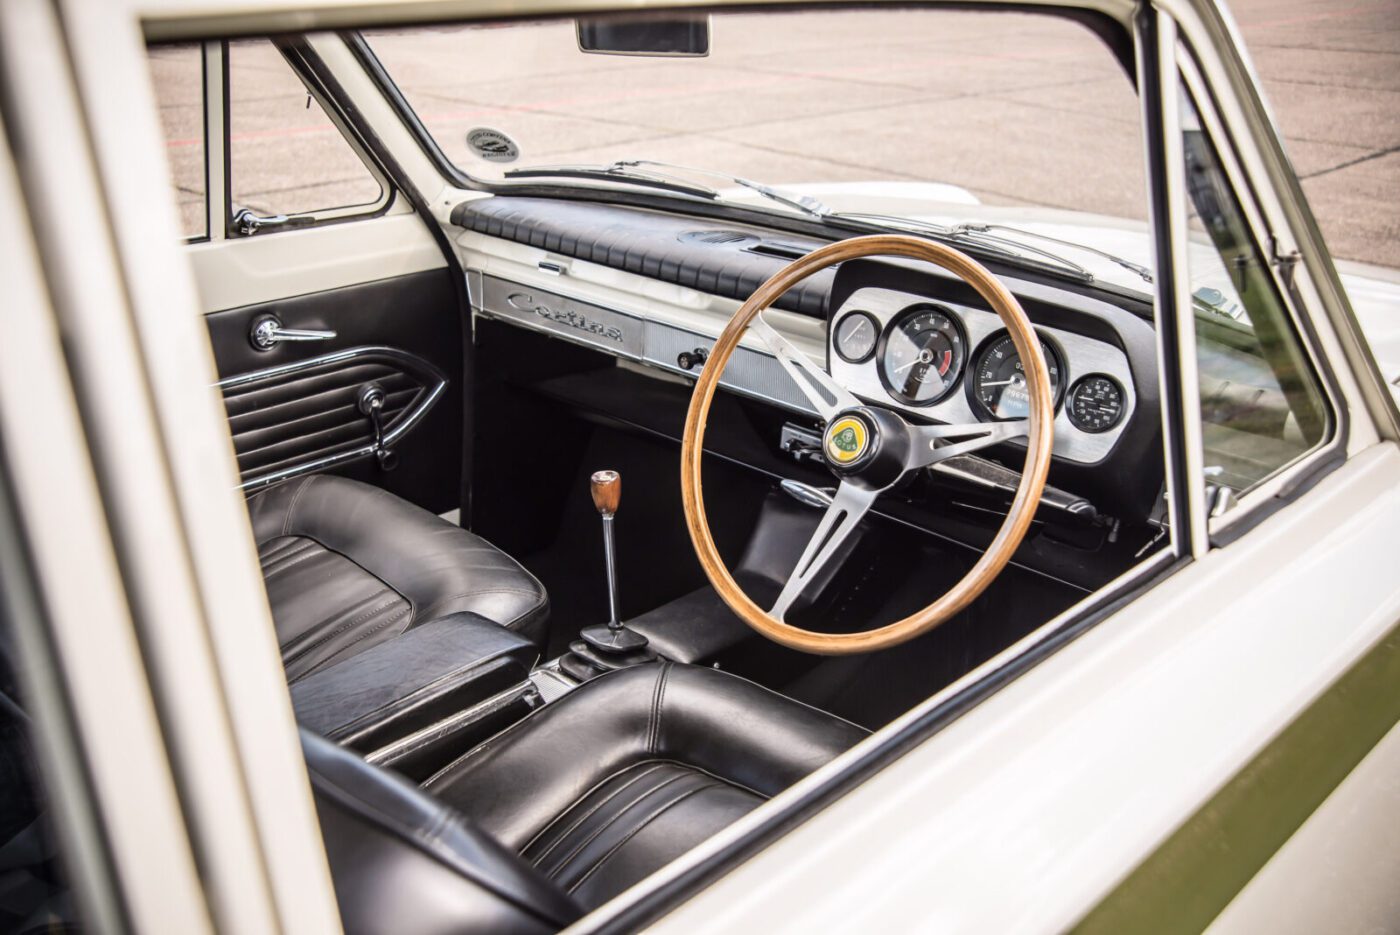 Lotus Cortina SE interior